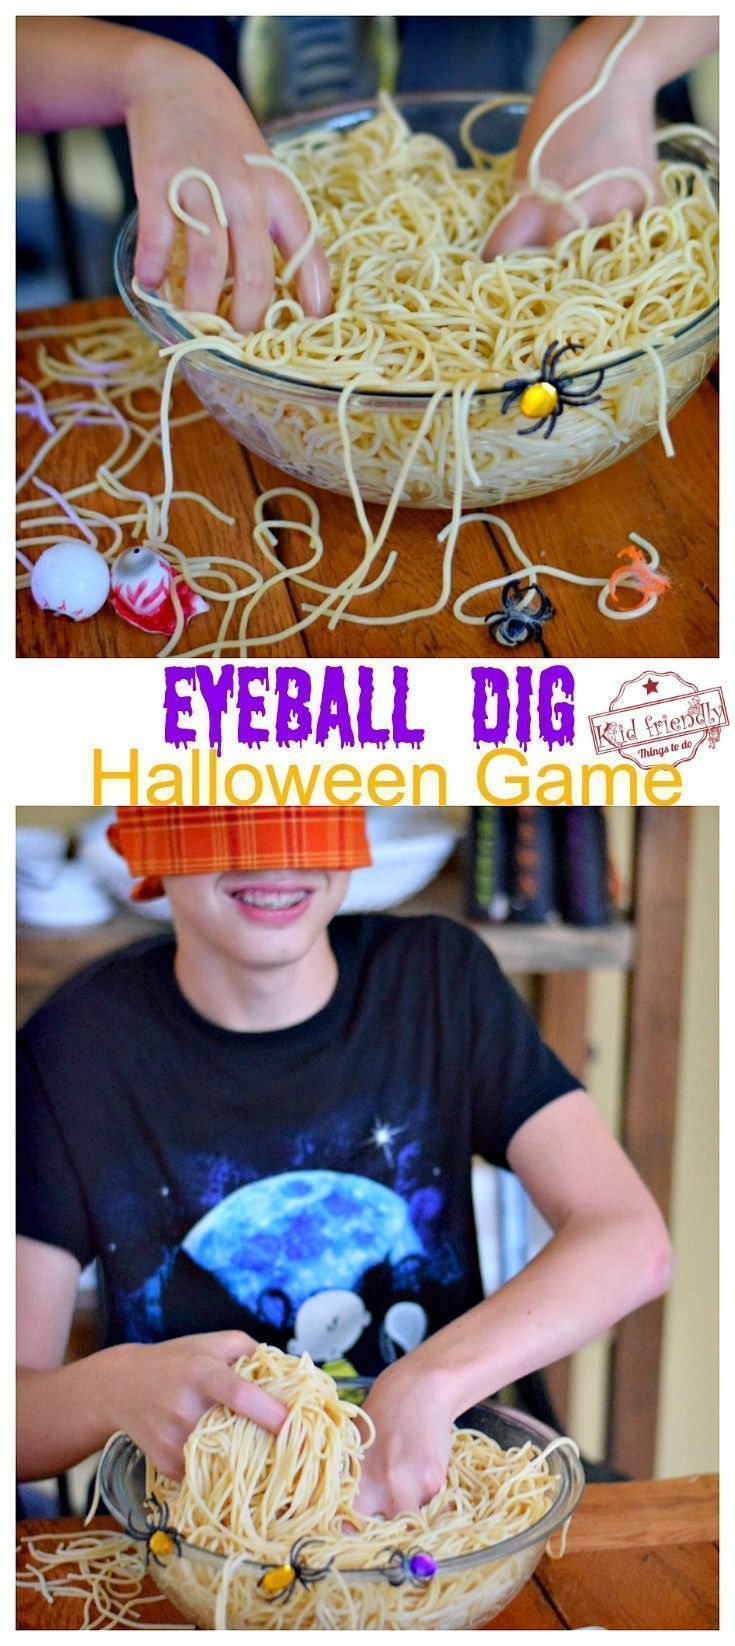 Easy Halloween Video Games